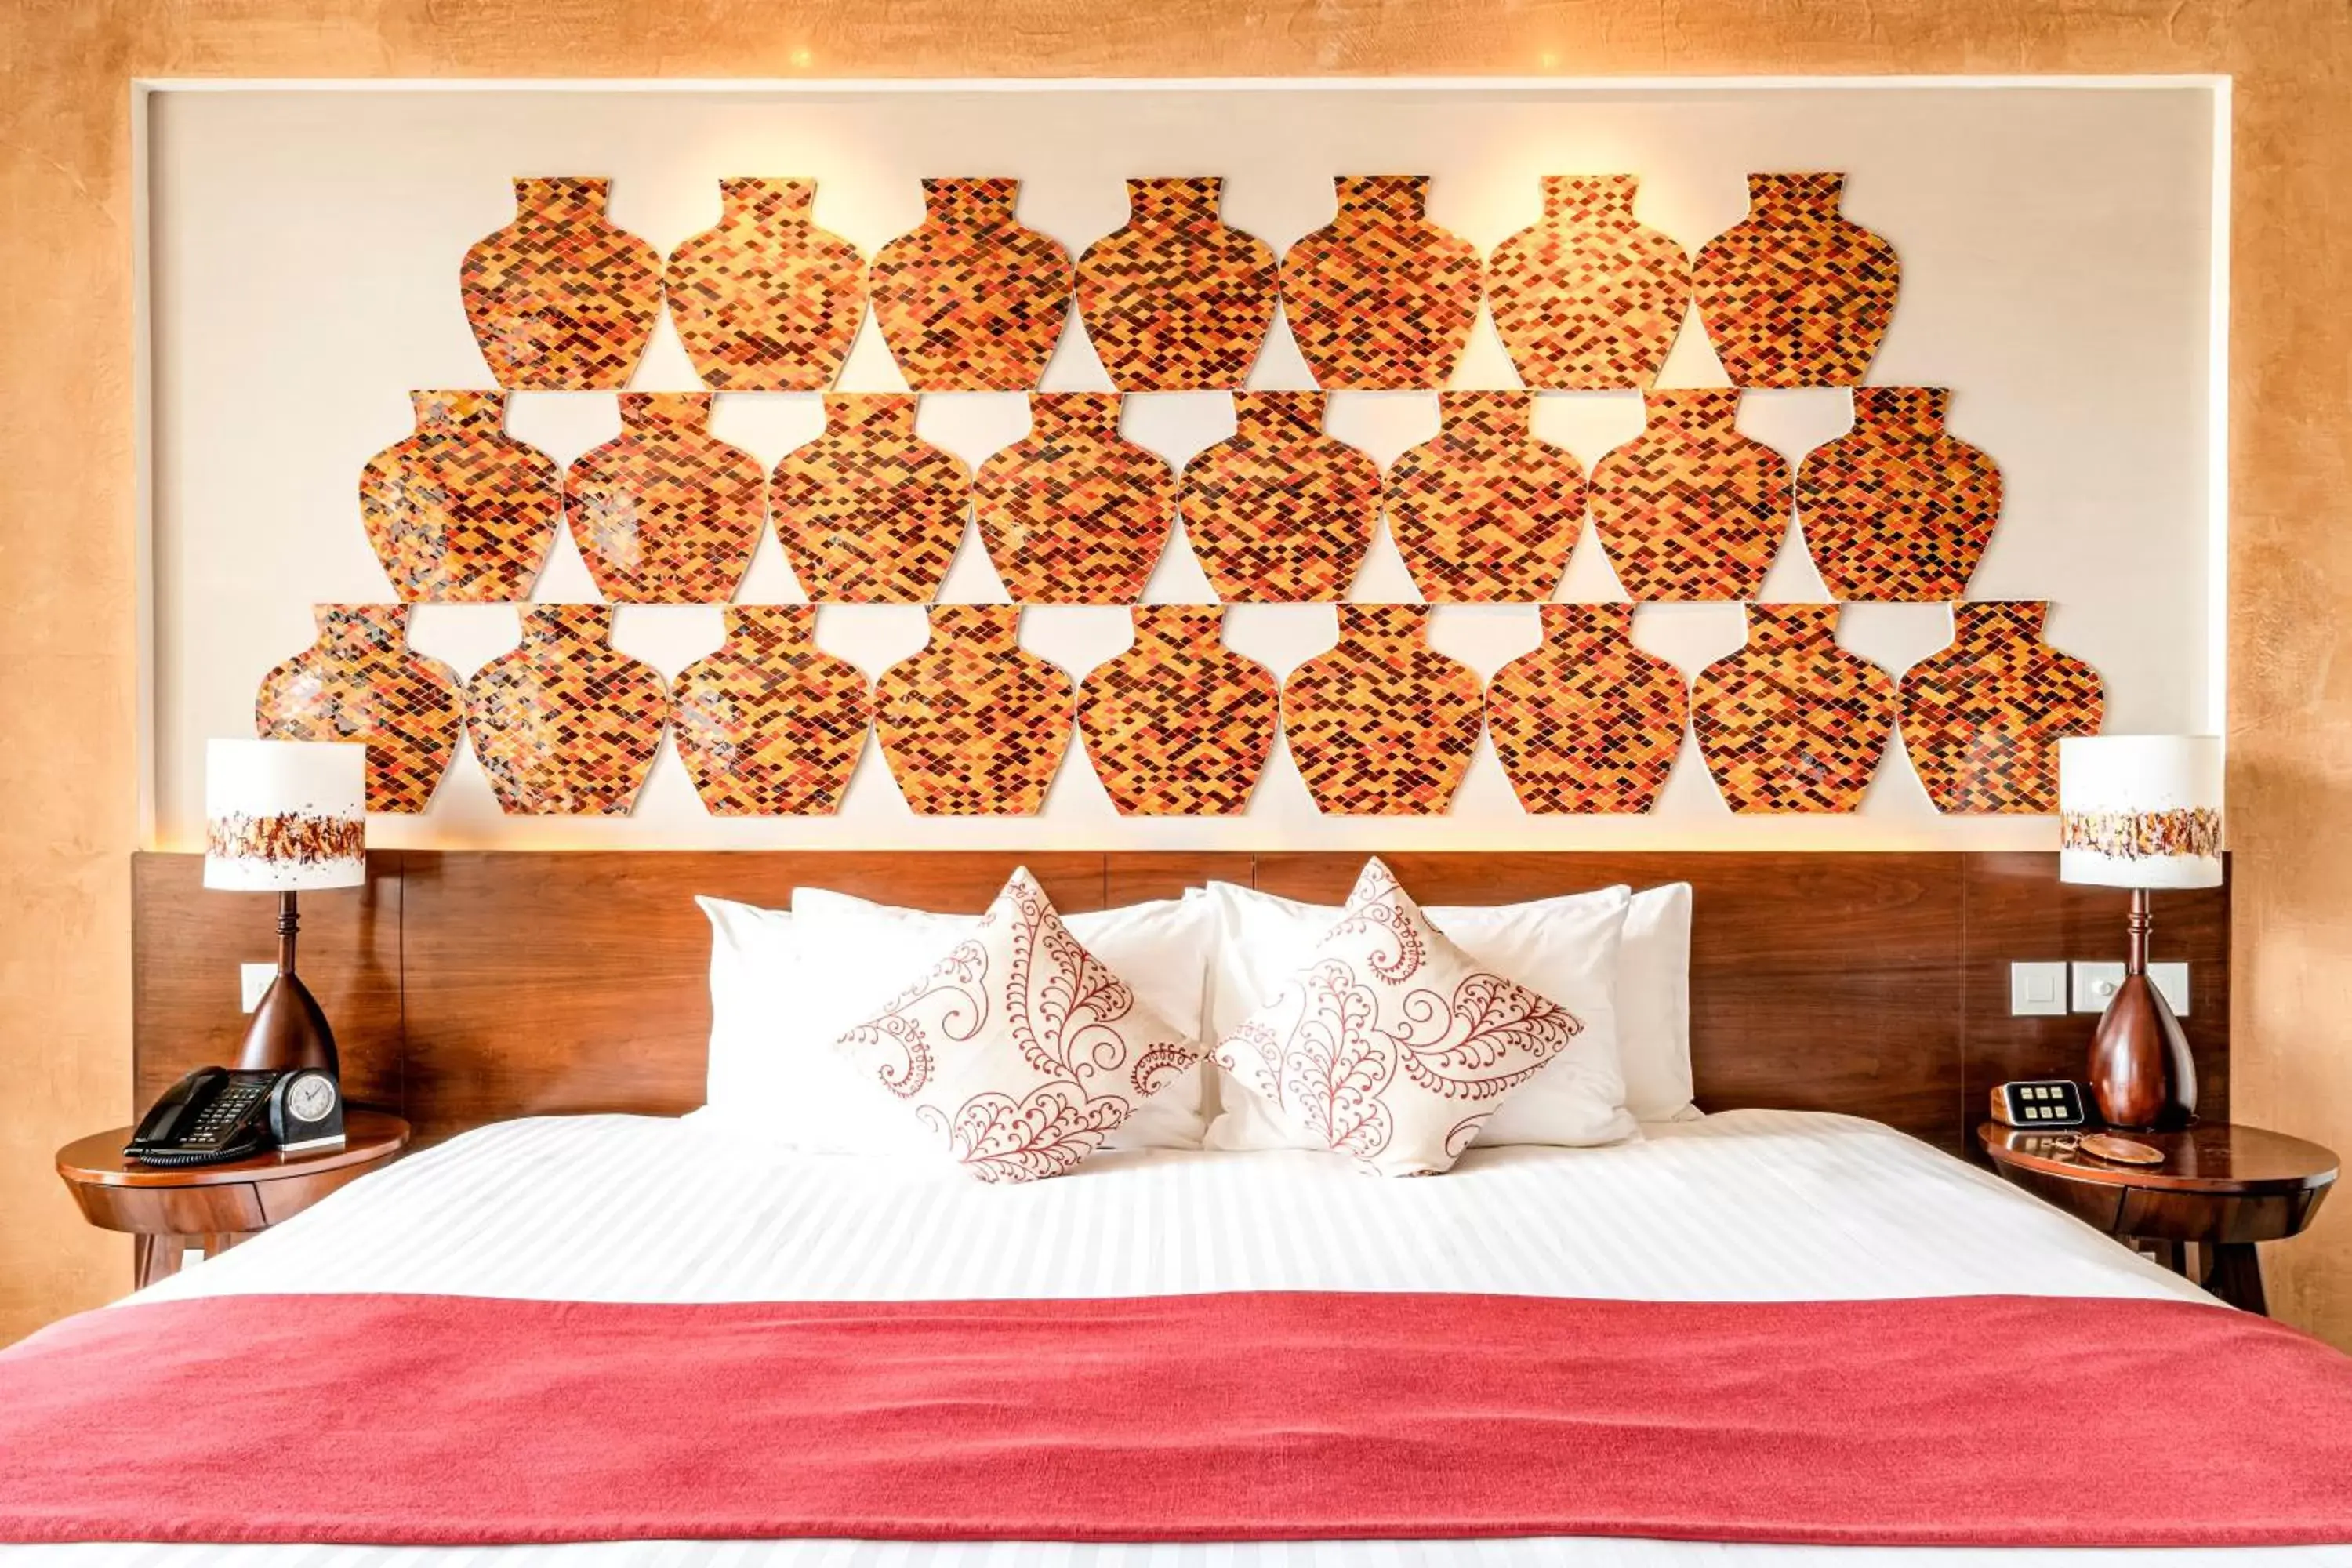 Bed in Salinda Resort Phu Quoc - Sparkling Wine Breakfast